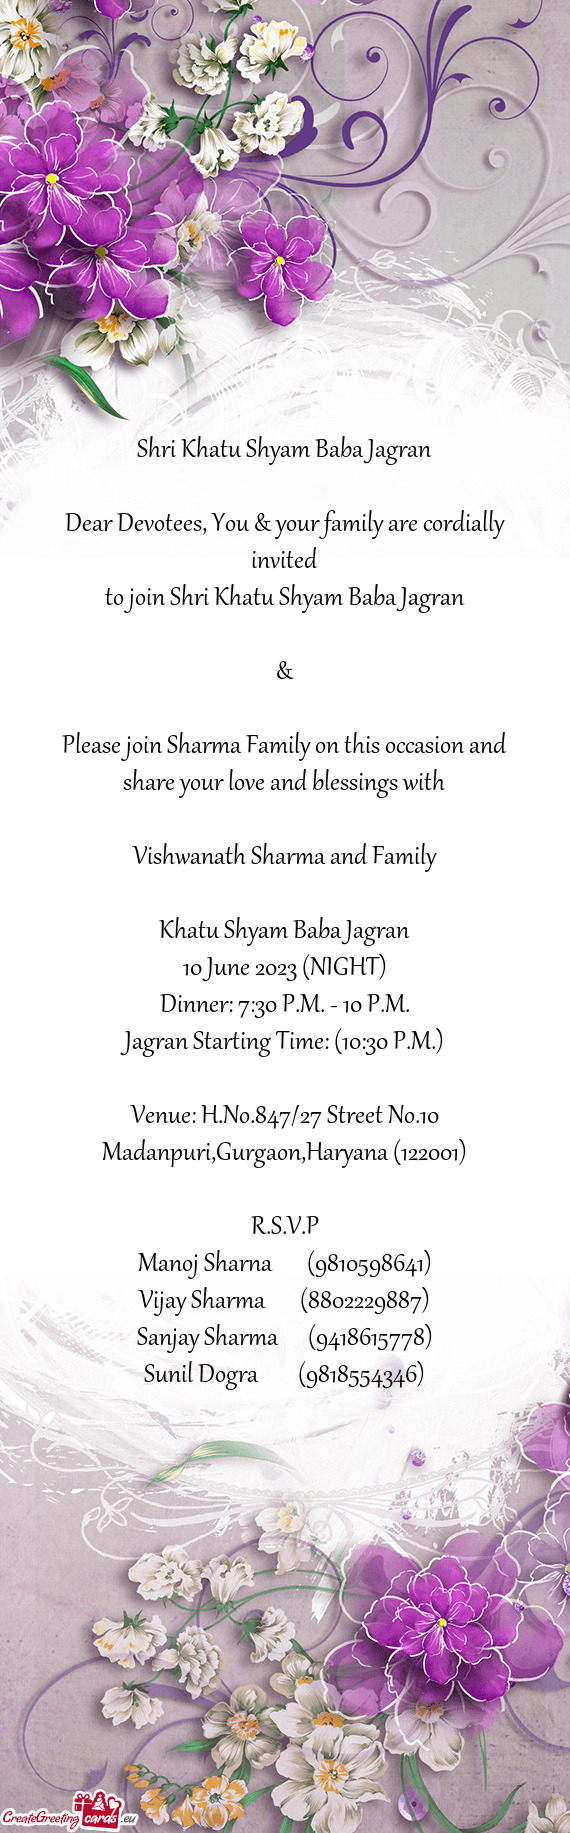 To join Shri Khatu Shyam Baba Jagran